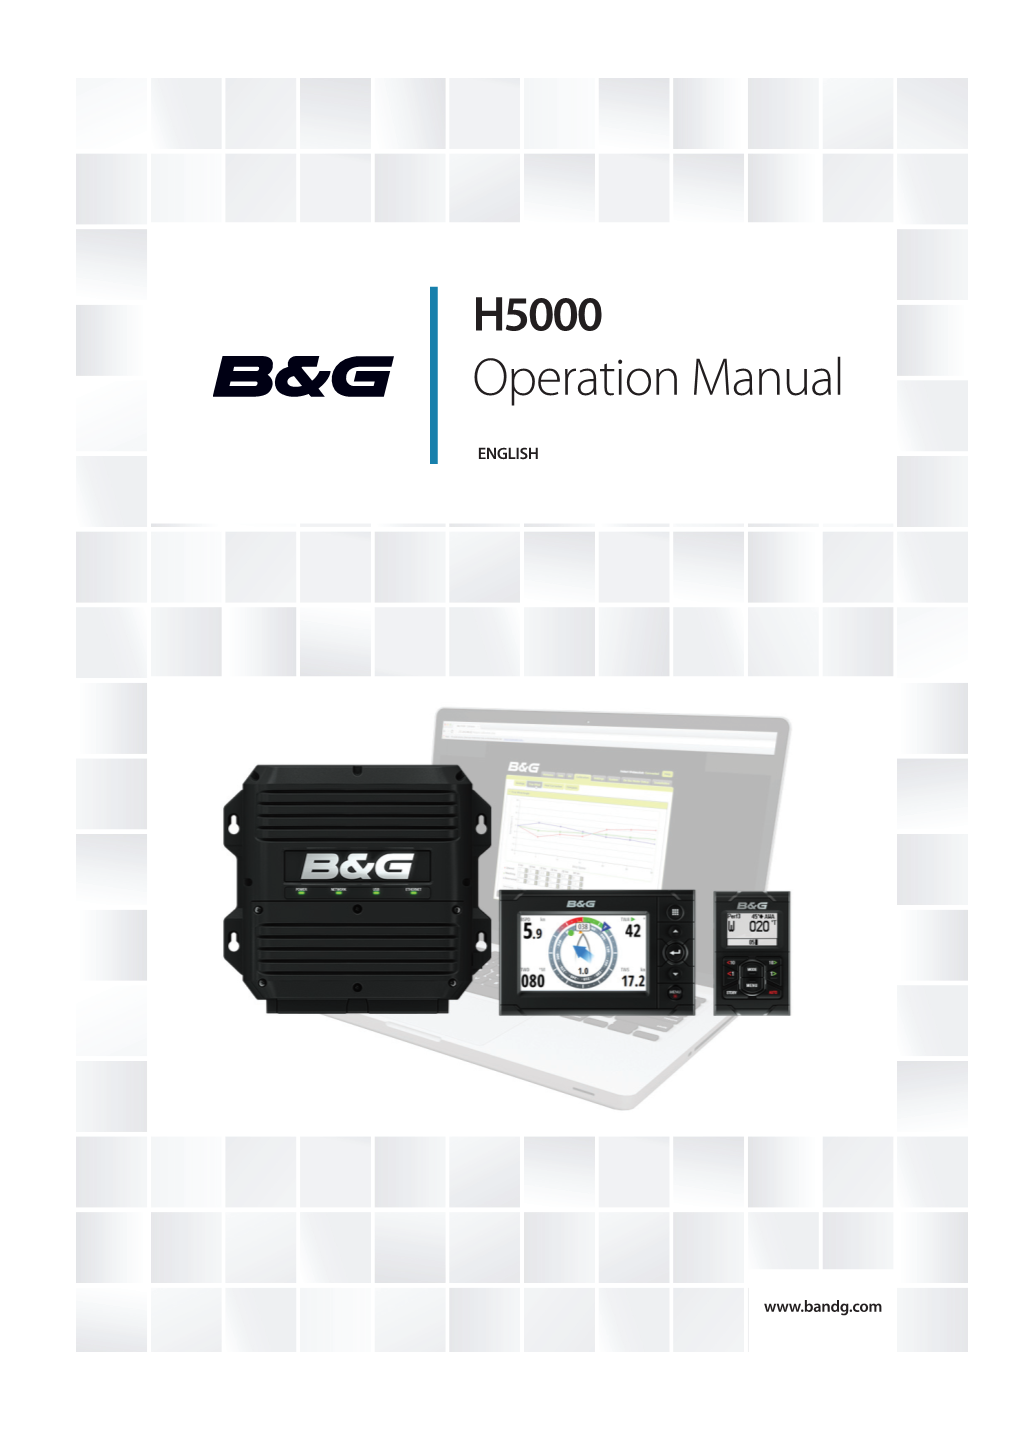 H5000 Operation Manual